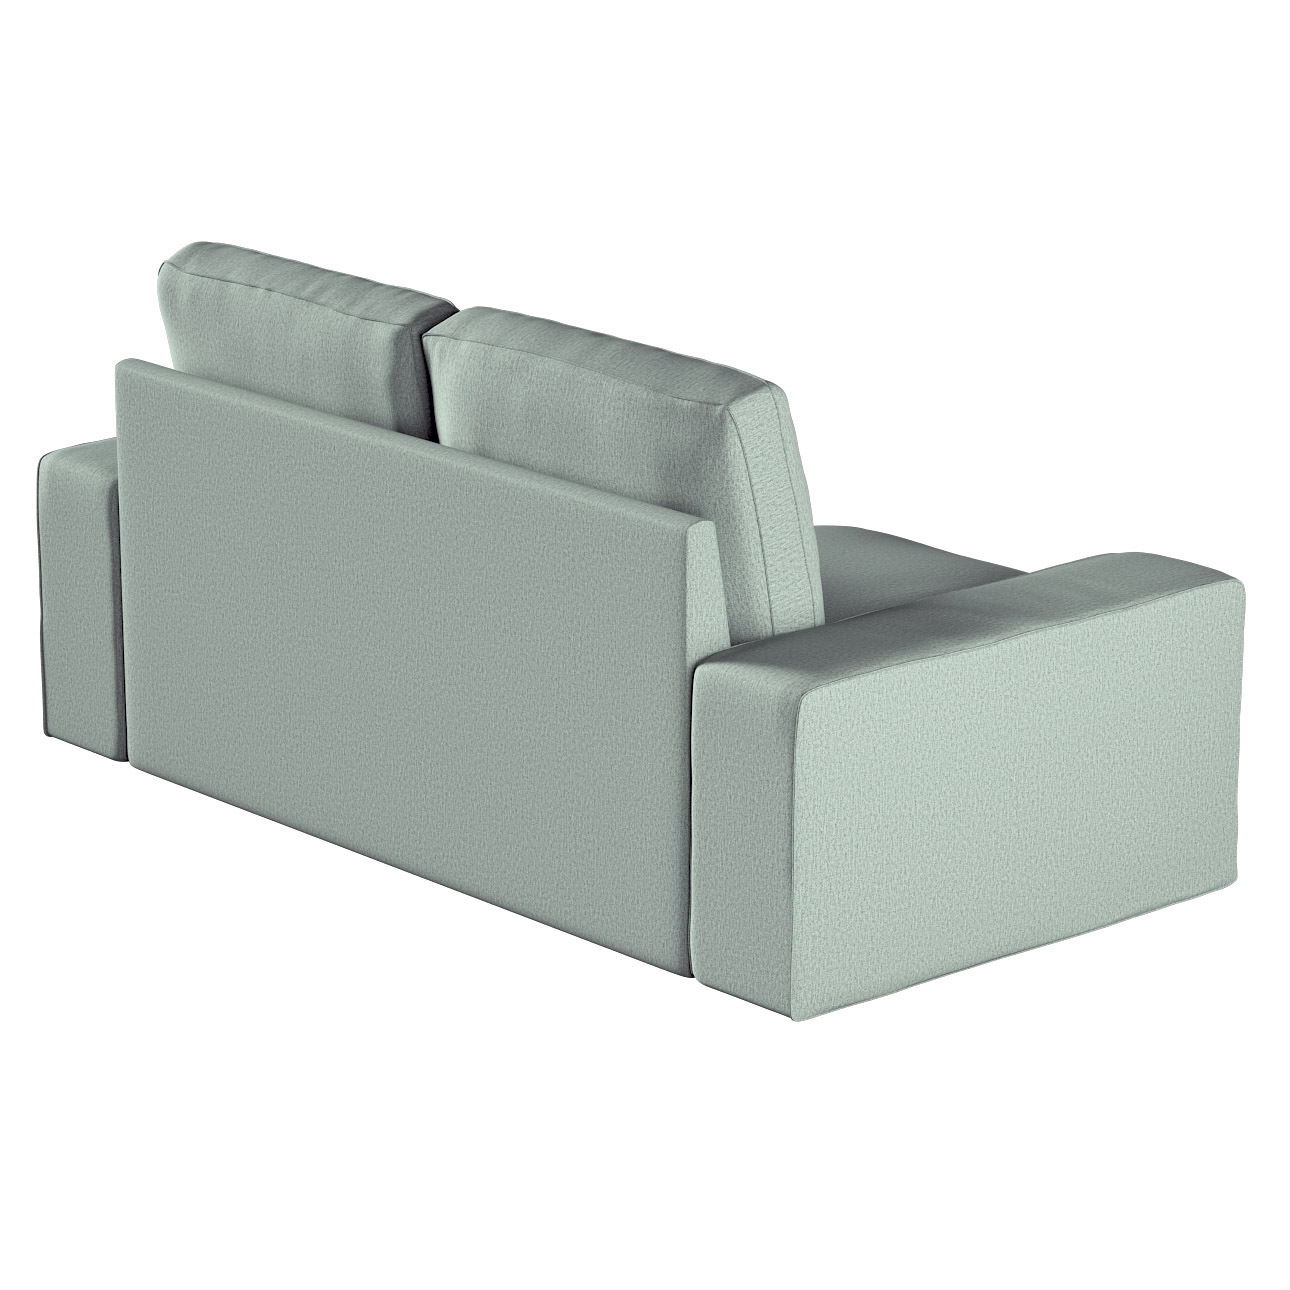 Bezug für Kivik 2-Sitzer Sofa, eukalyptusgrün, Bezug für Sofa Kivik 2-Sitze günstig online kaufen